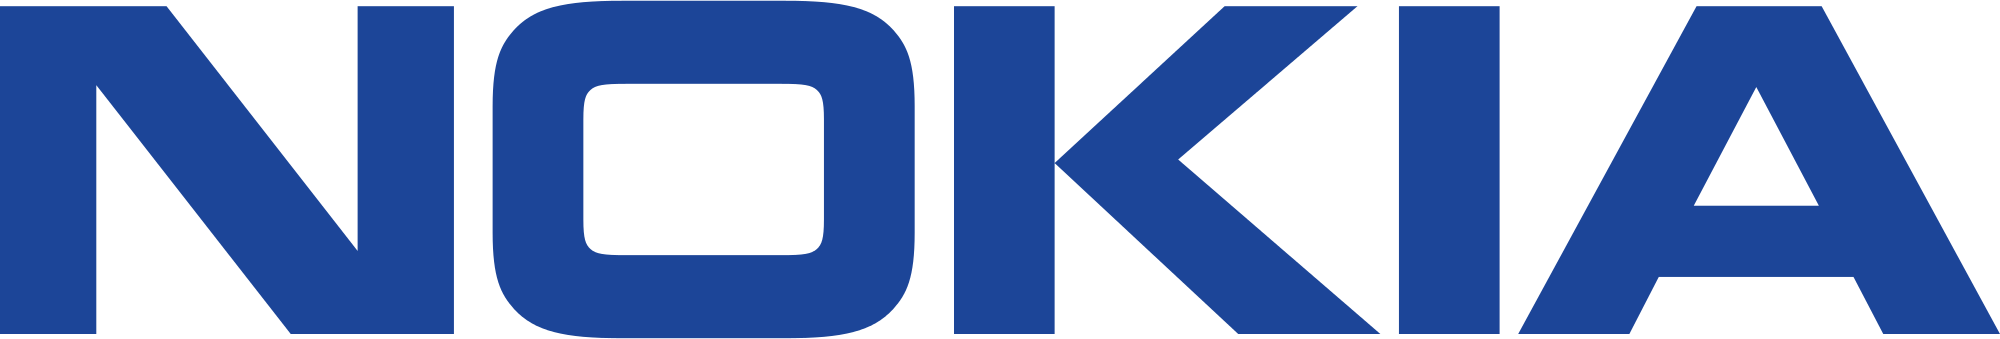 nokia networks logo